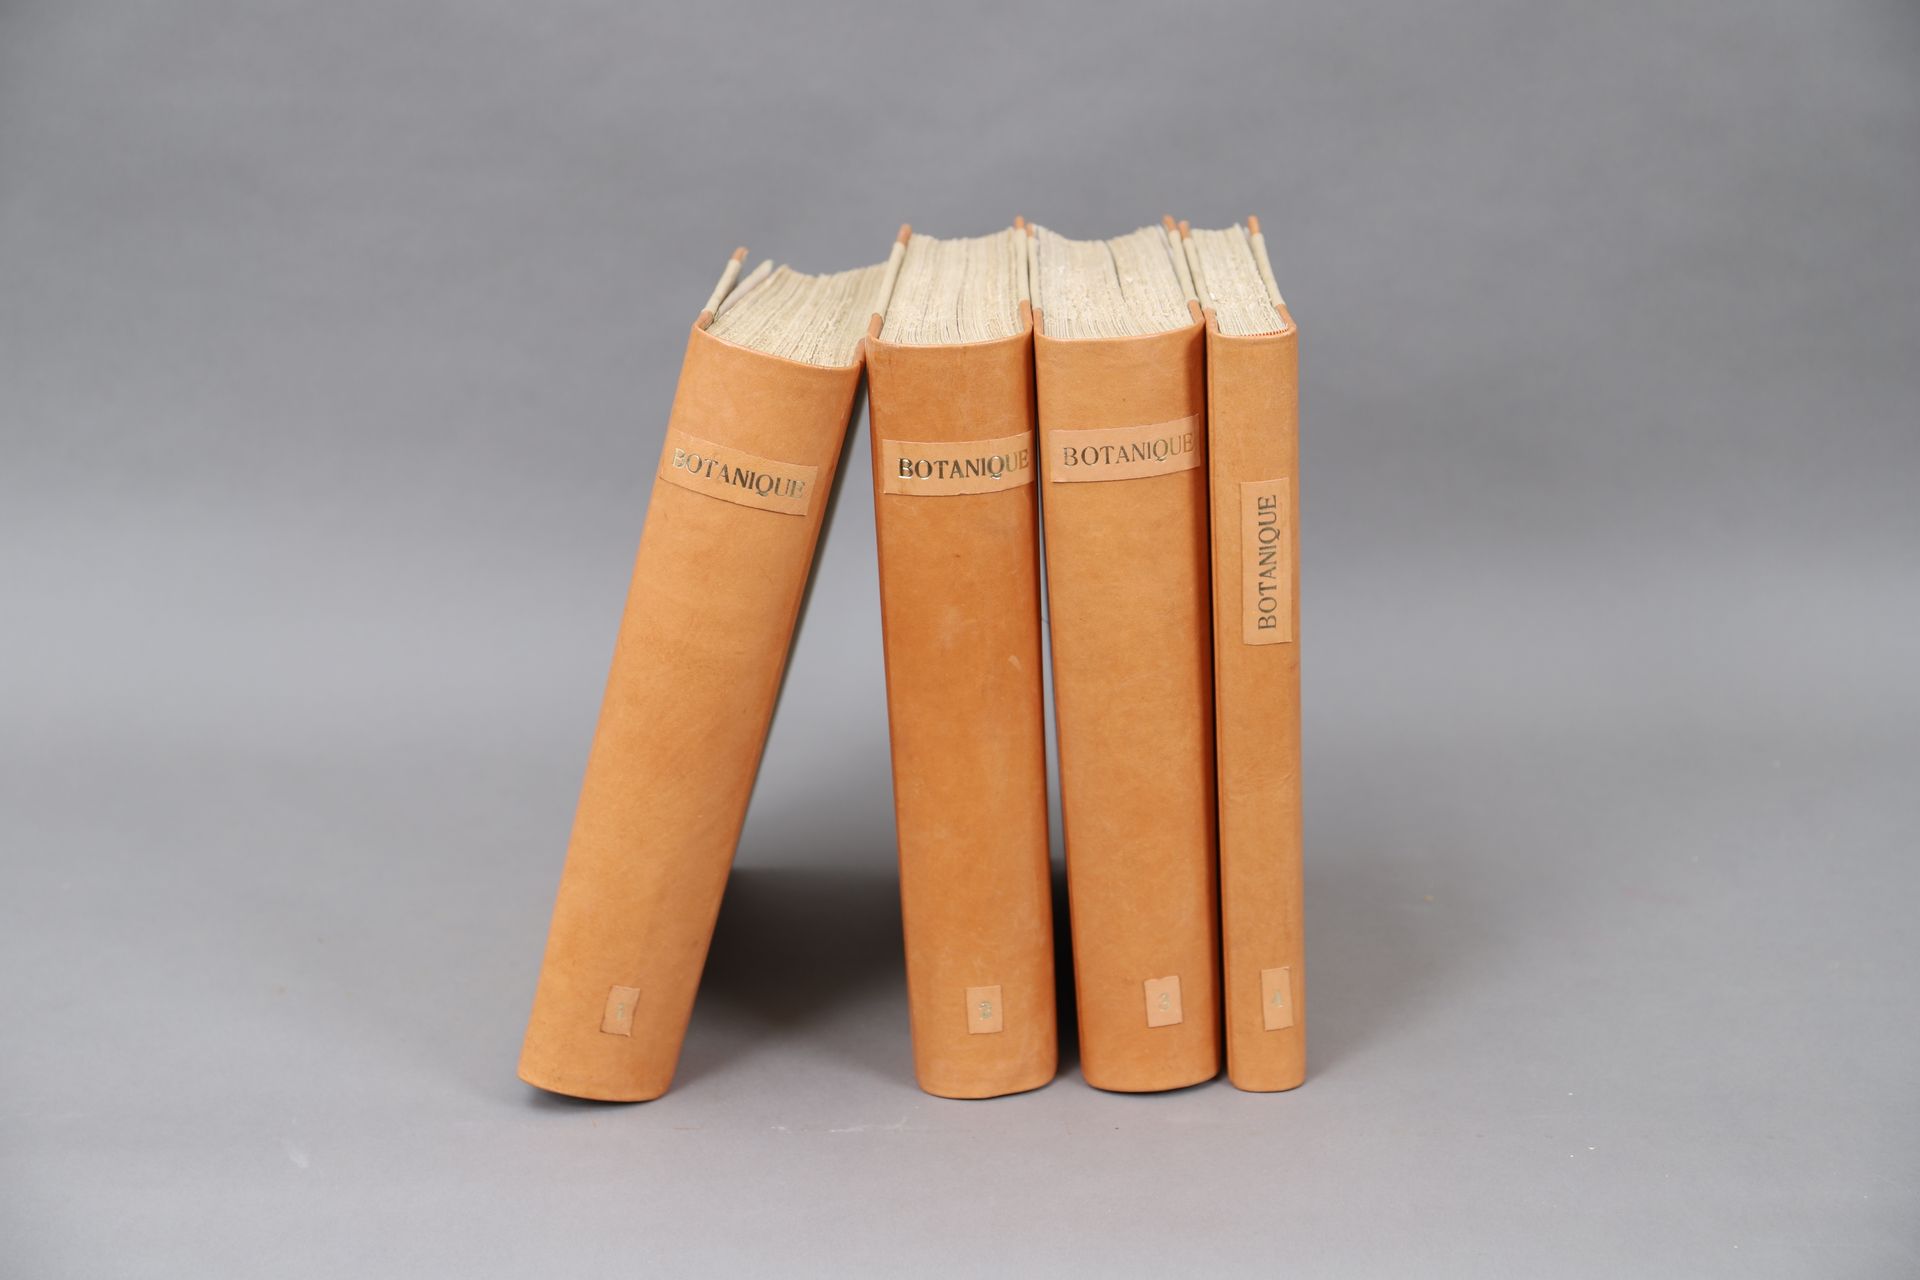 Null H. BAILLON著的《植物学词典》(DICTIONARY OF BOTANICS)

巴黎Hachette 1876年

4卷。